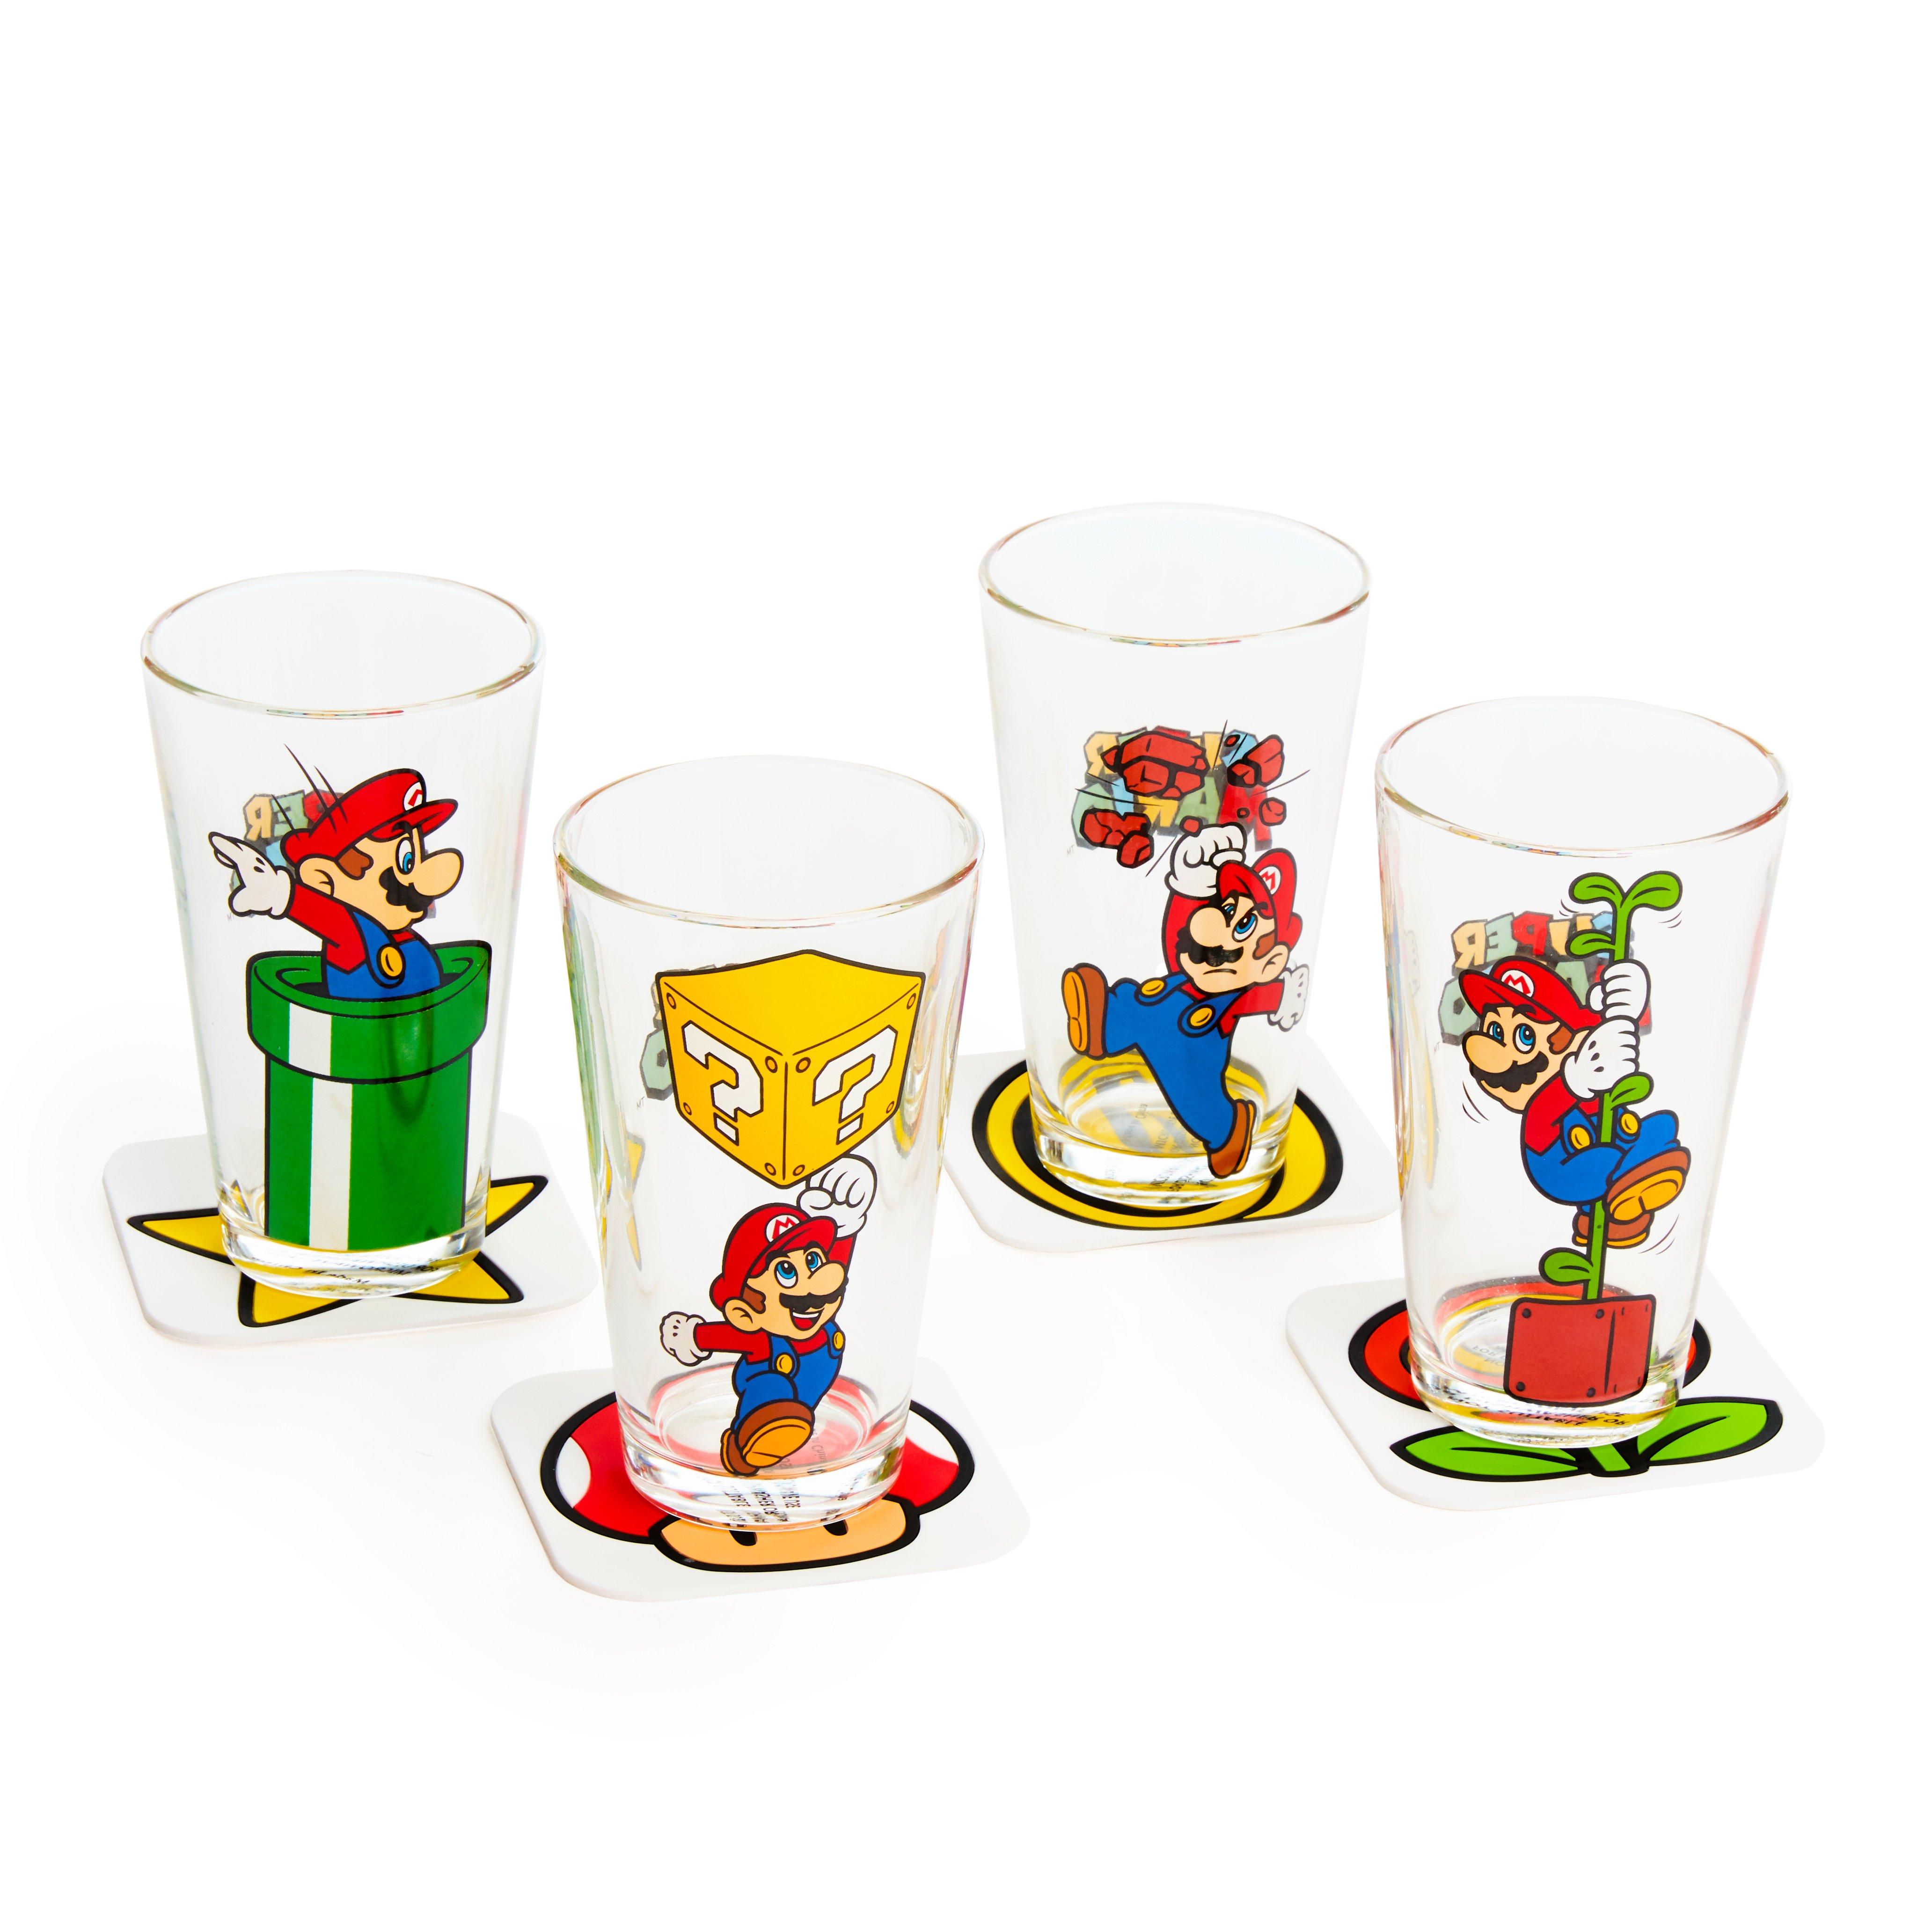 https://media.gamestop.com/i/gamestop/11121329/Geeknet-Nintendo-Super-Mario-Action-Drinkware-Set-GameStop-Exclusive